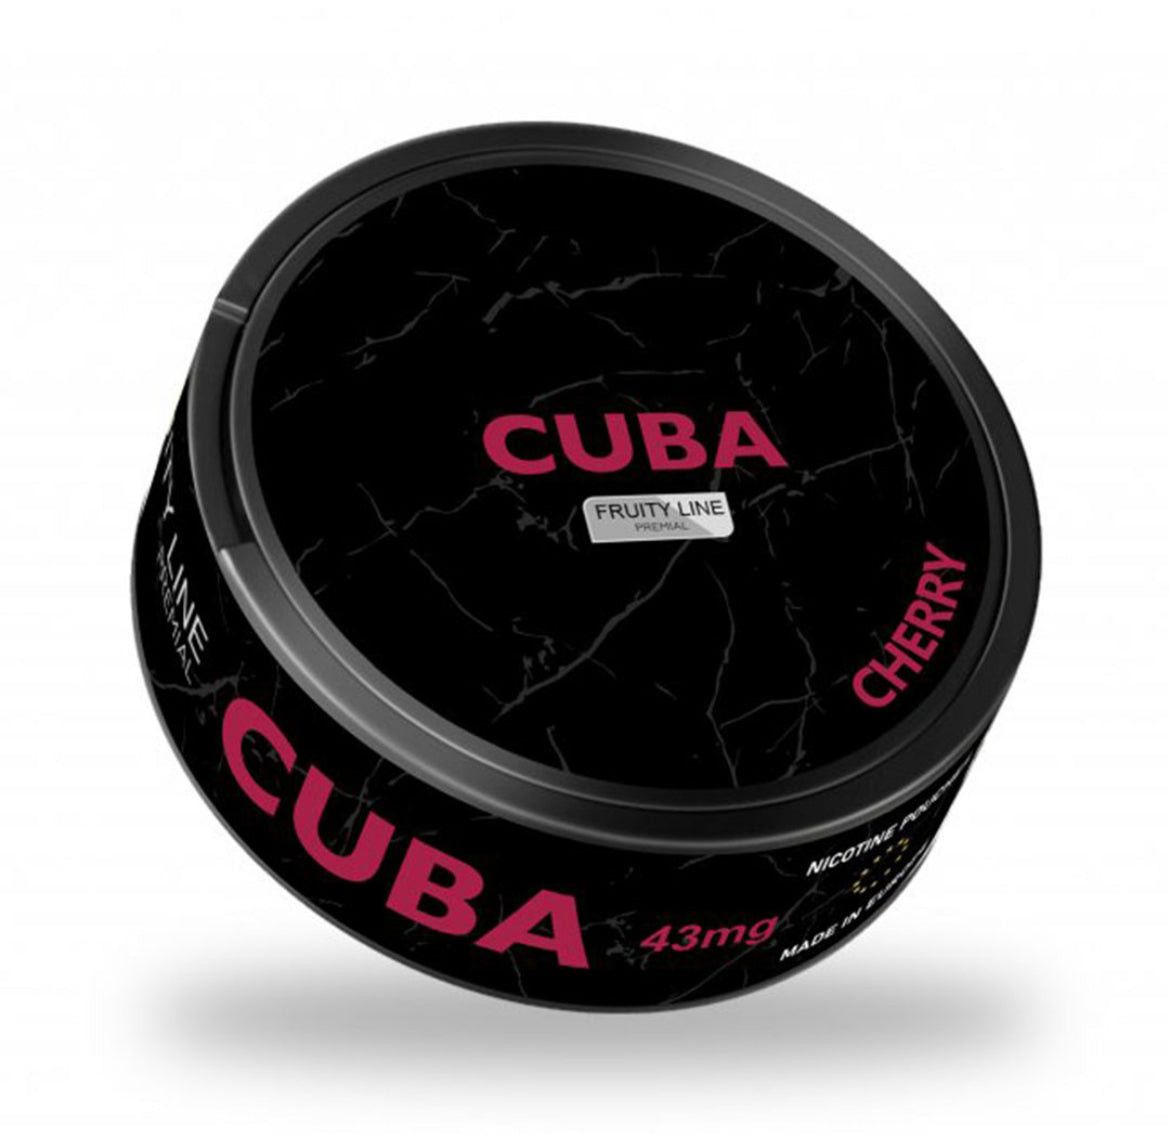 Cuba Black Cherry.